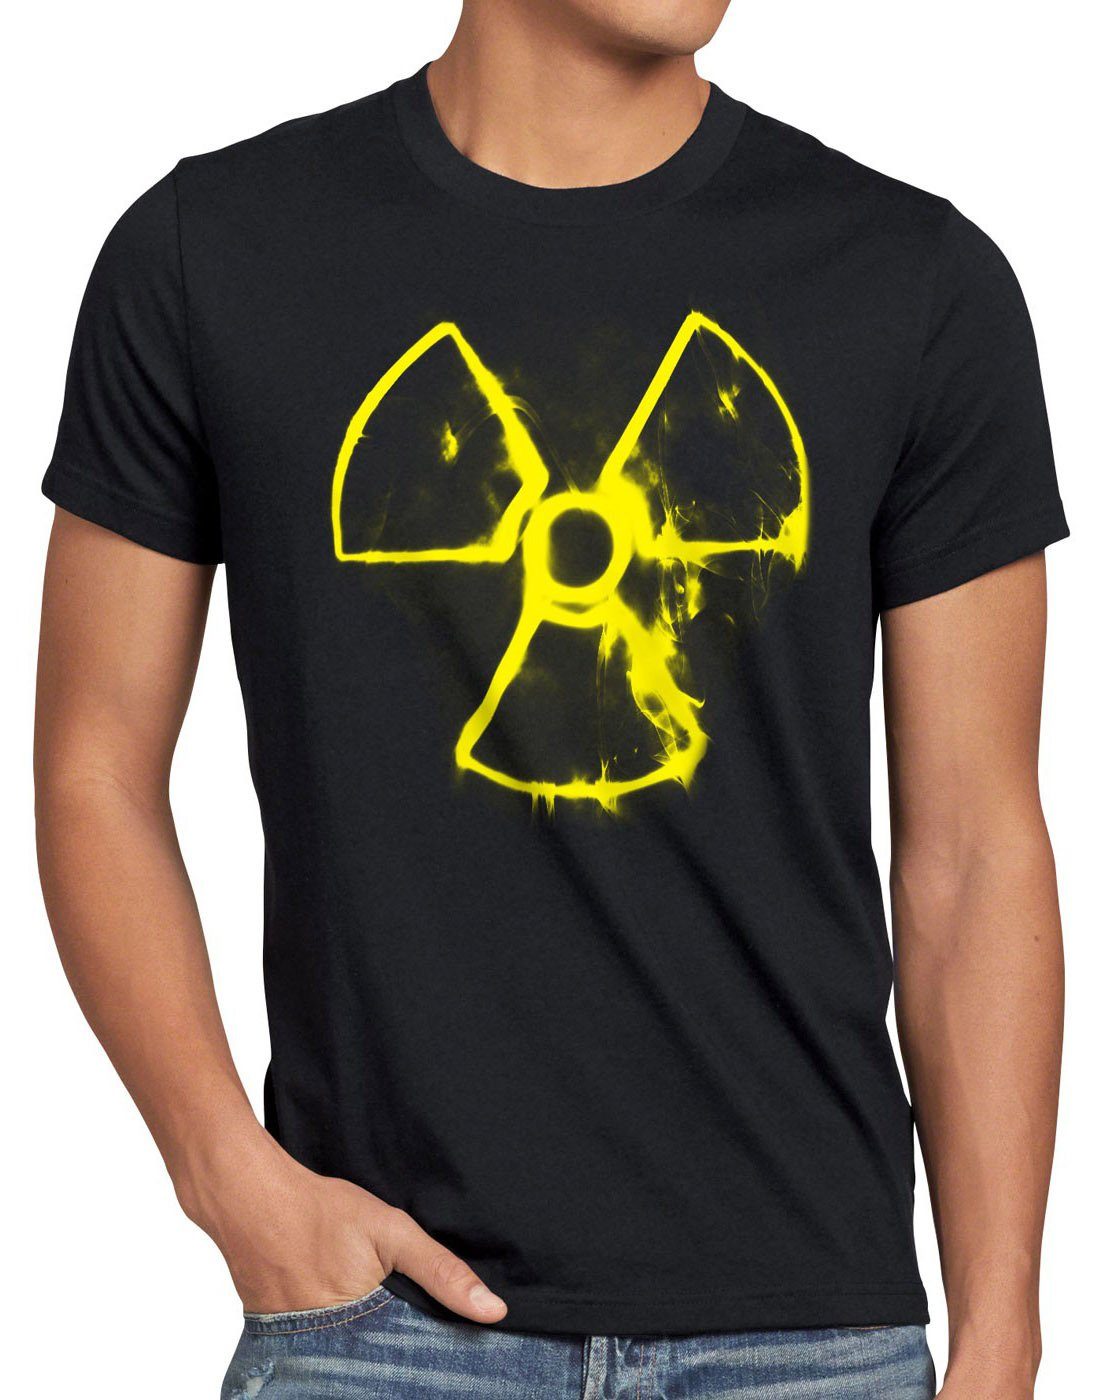 style3 Print-Shirt Herren T-Shirt Nuclear Smoke nein danke akw atomkraft